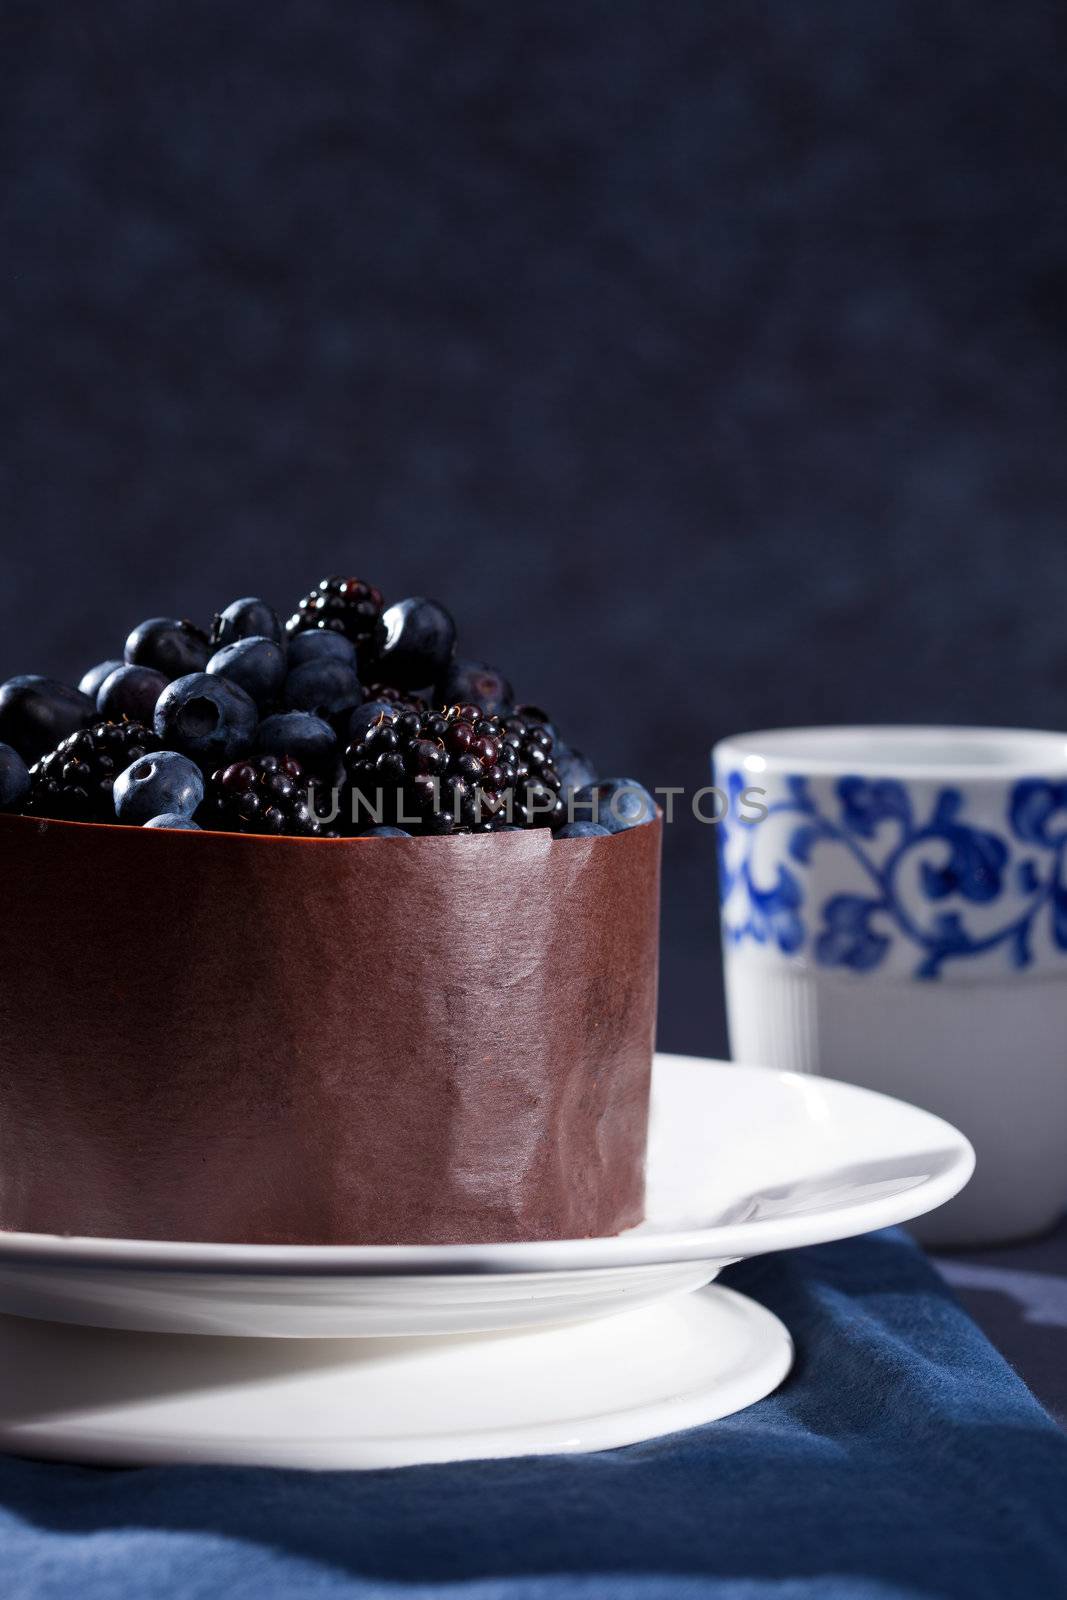 Beautiful chocolate cake by Fotosmurf